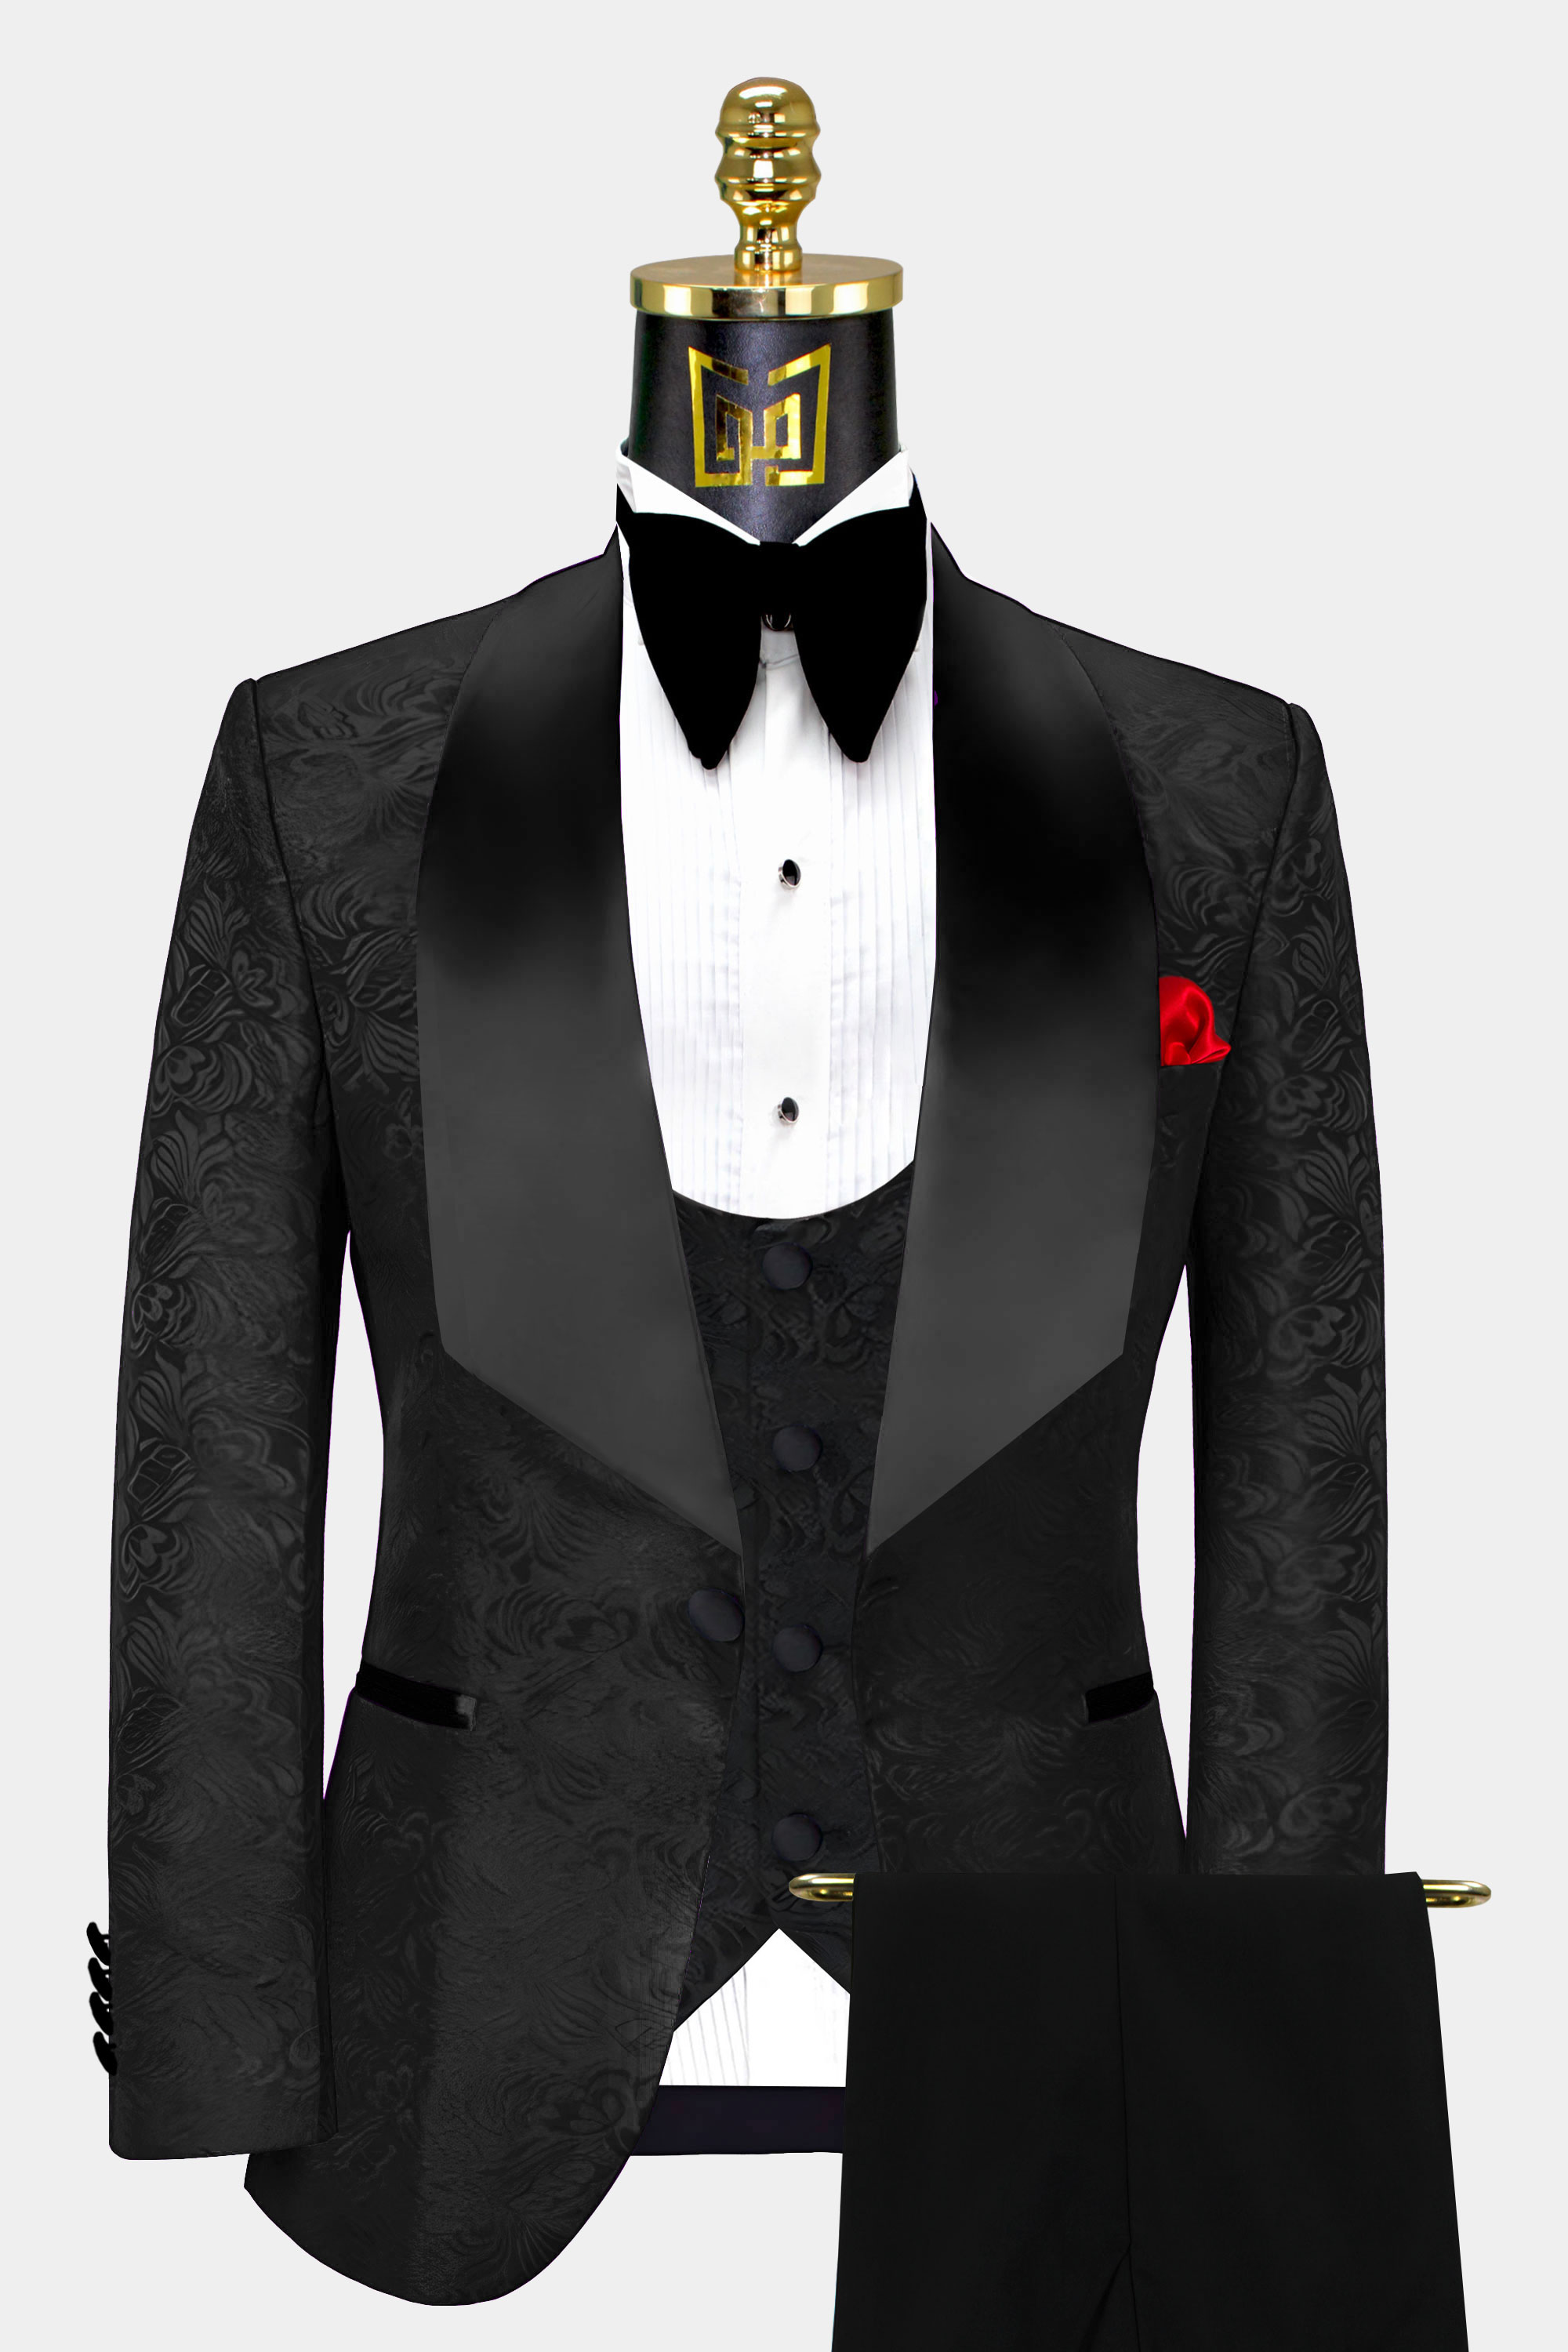 Mens All Black Tuxedo Groom Wedding Suit Prom Outfit From Gentlemansguru.com  